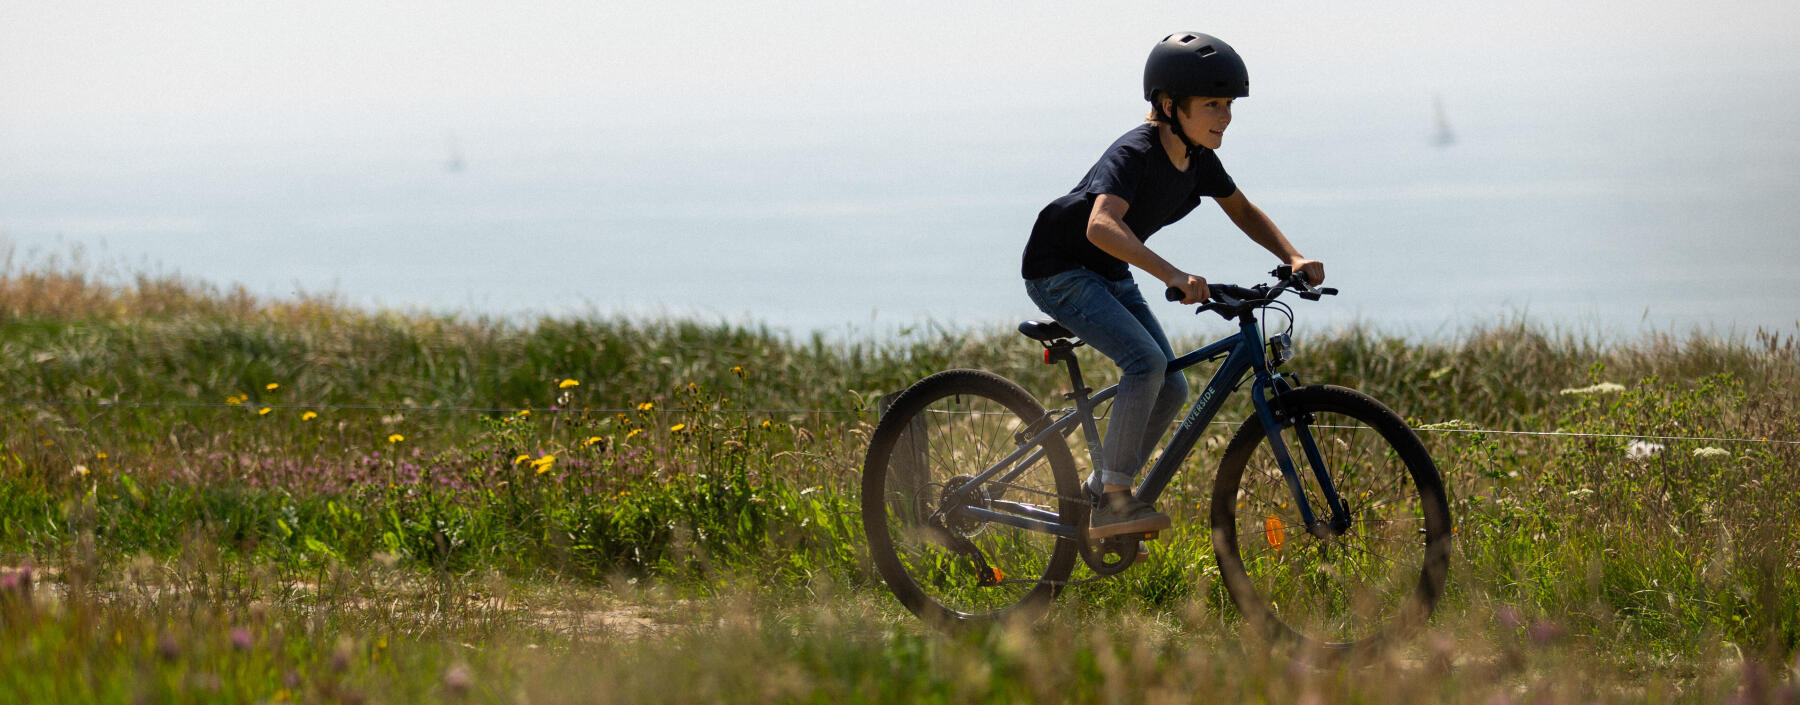 light-10 year old-kid-bike-decathlon-support